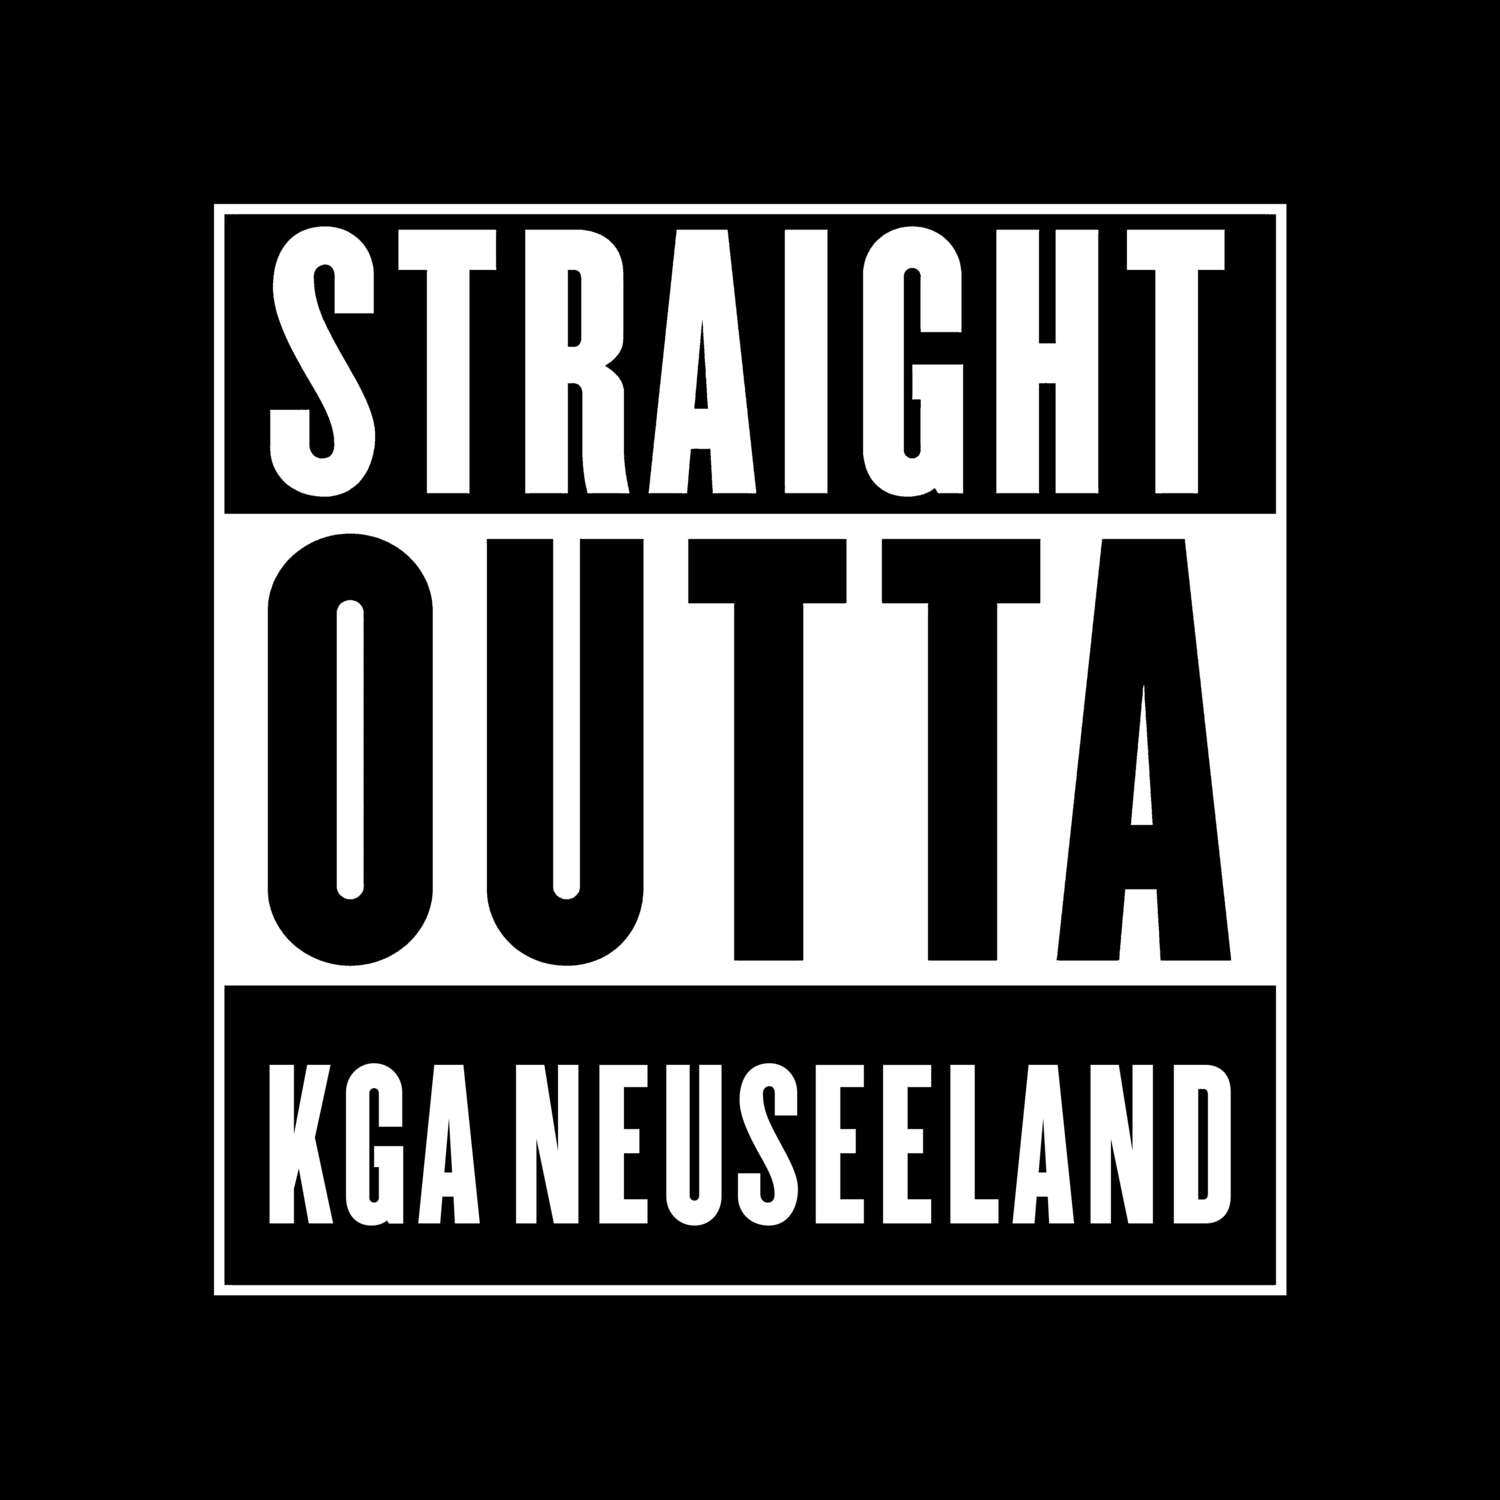 KGA Neuseeland T-Shirt »Straight Outta«